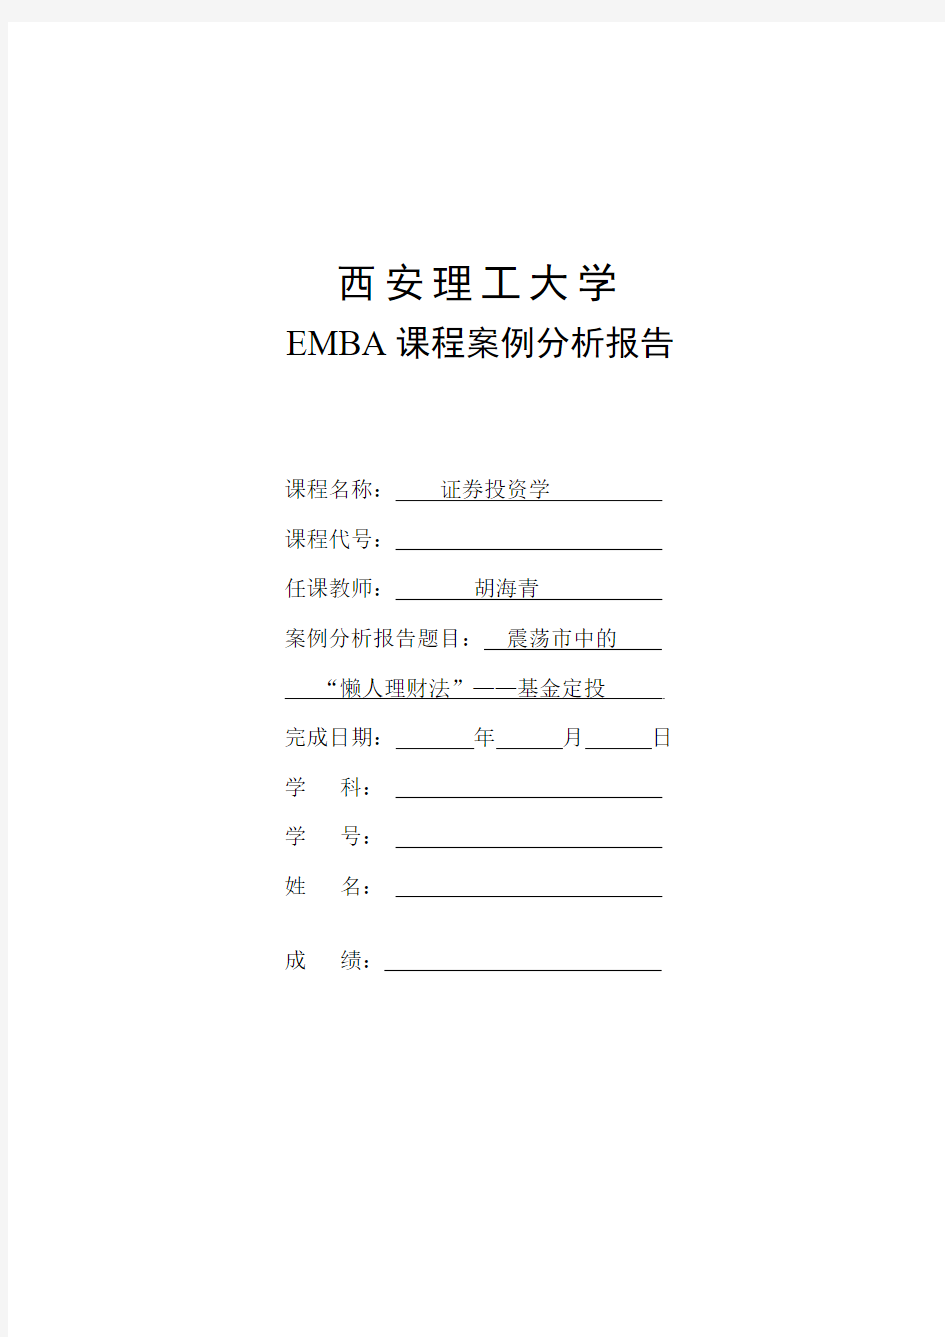 EMBA《证券投资学》案例作业2